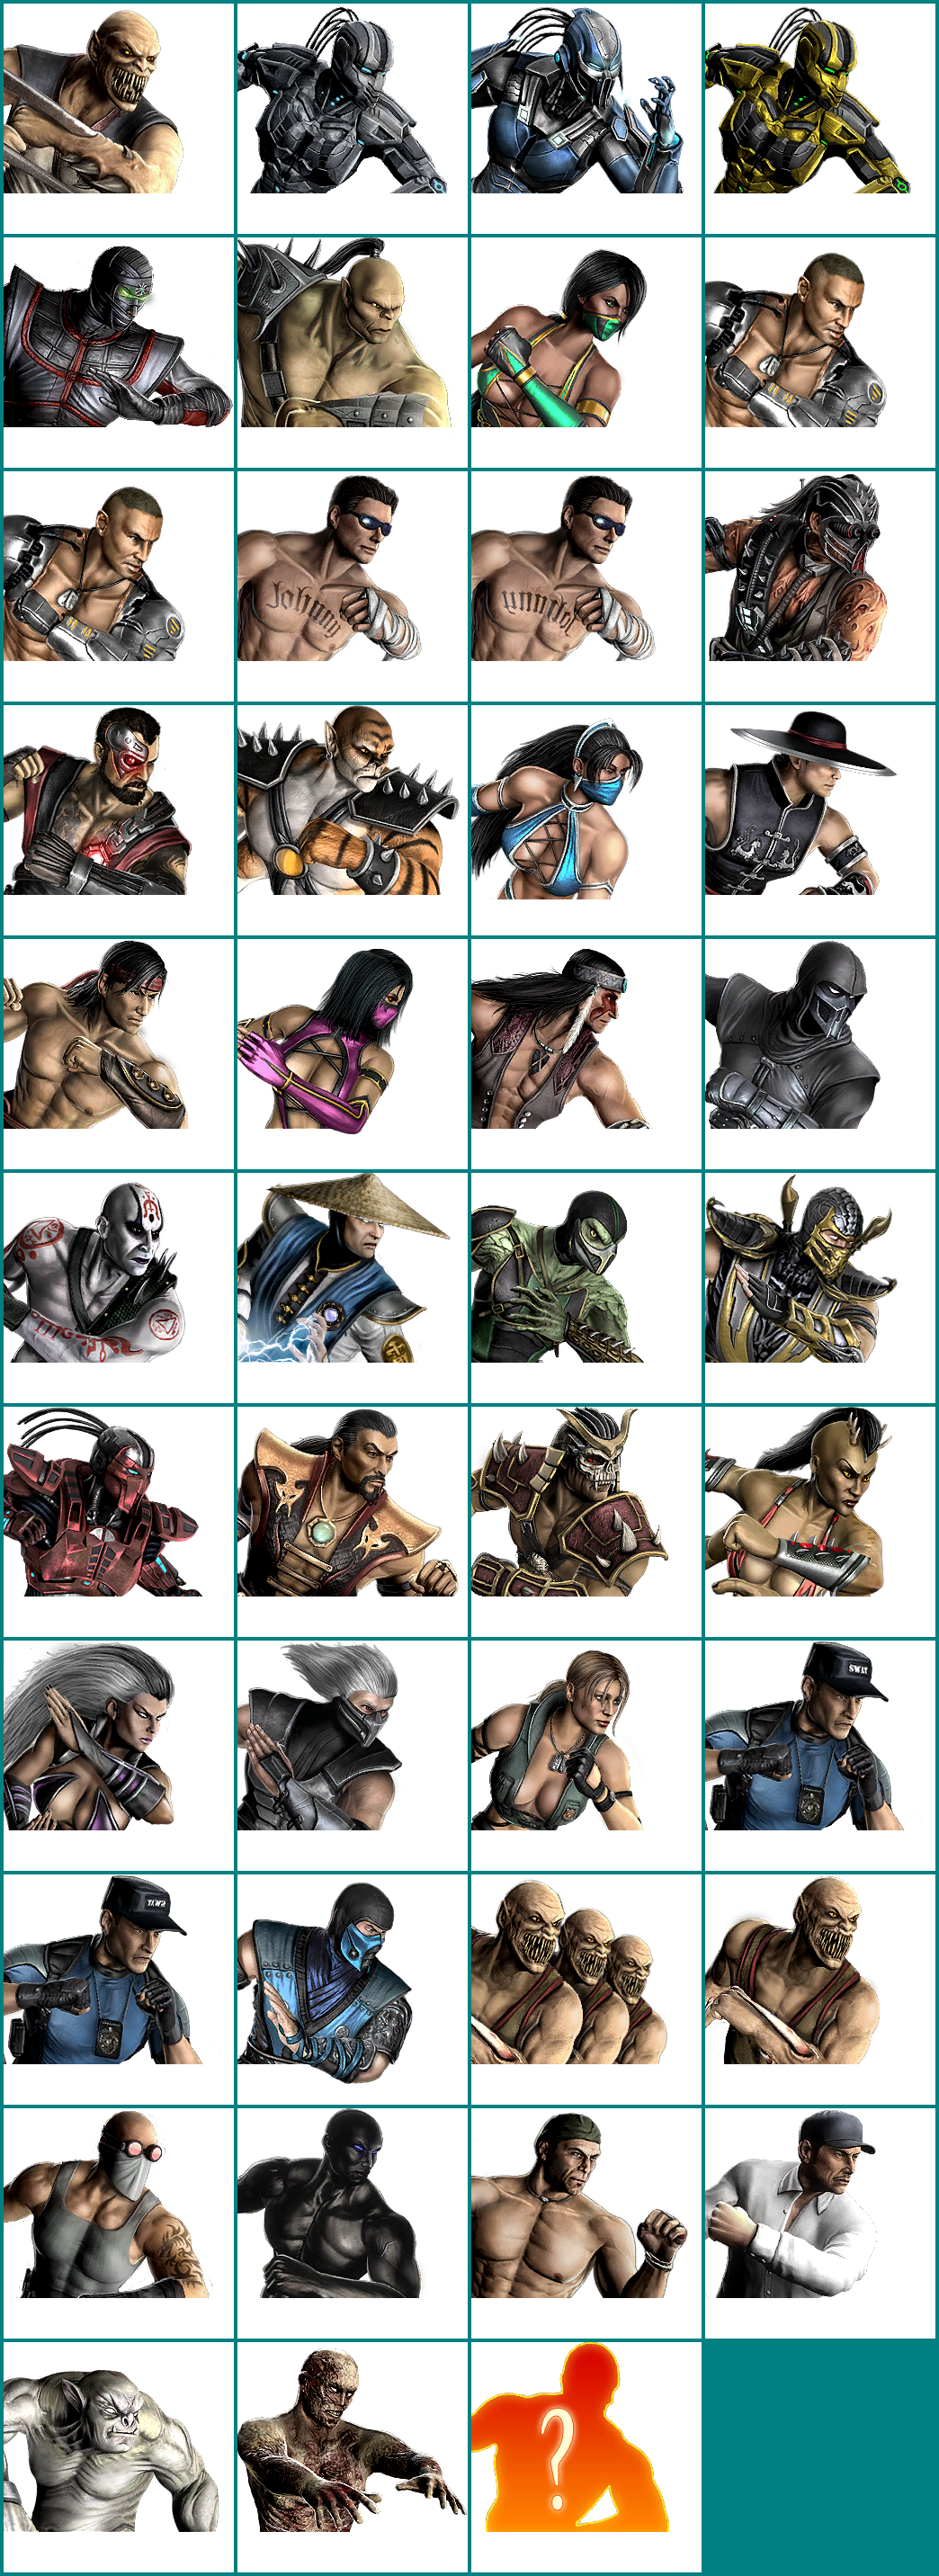 Mortal Kombat (2011) - Challenge Tower Character Icons